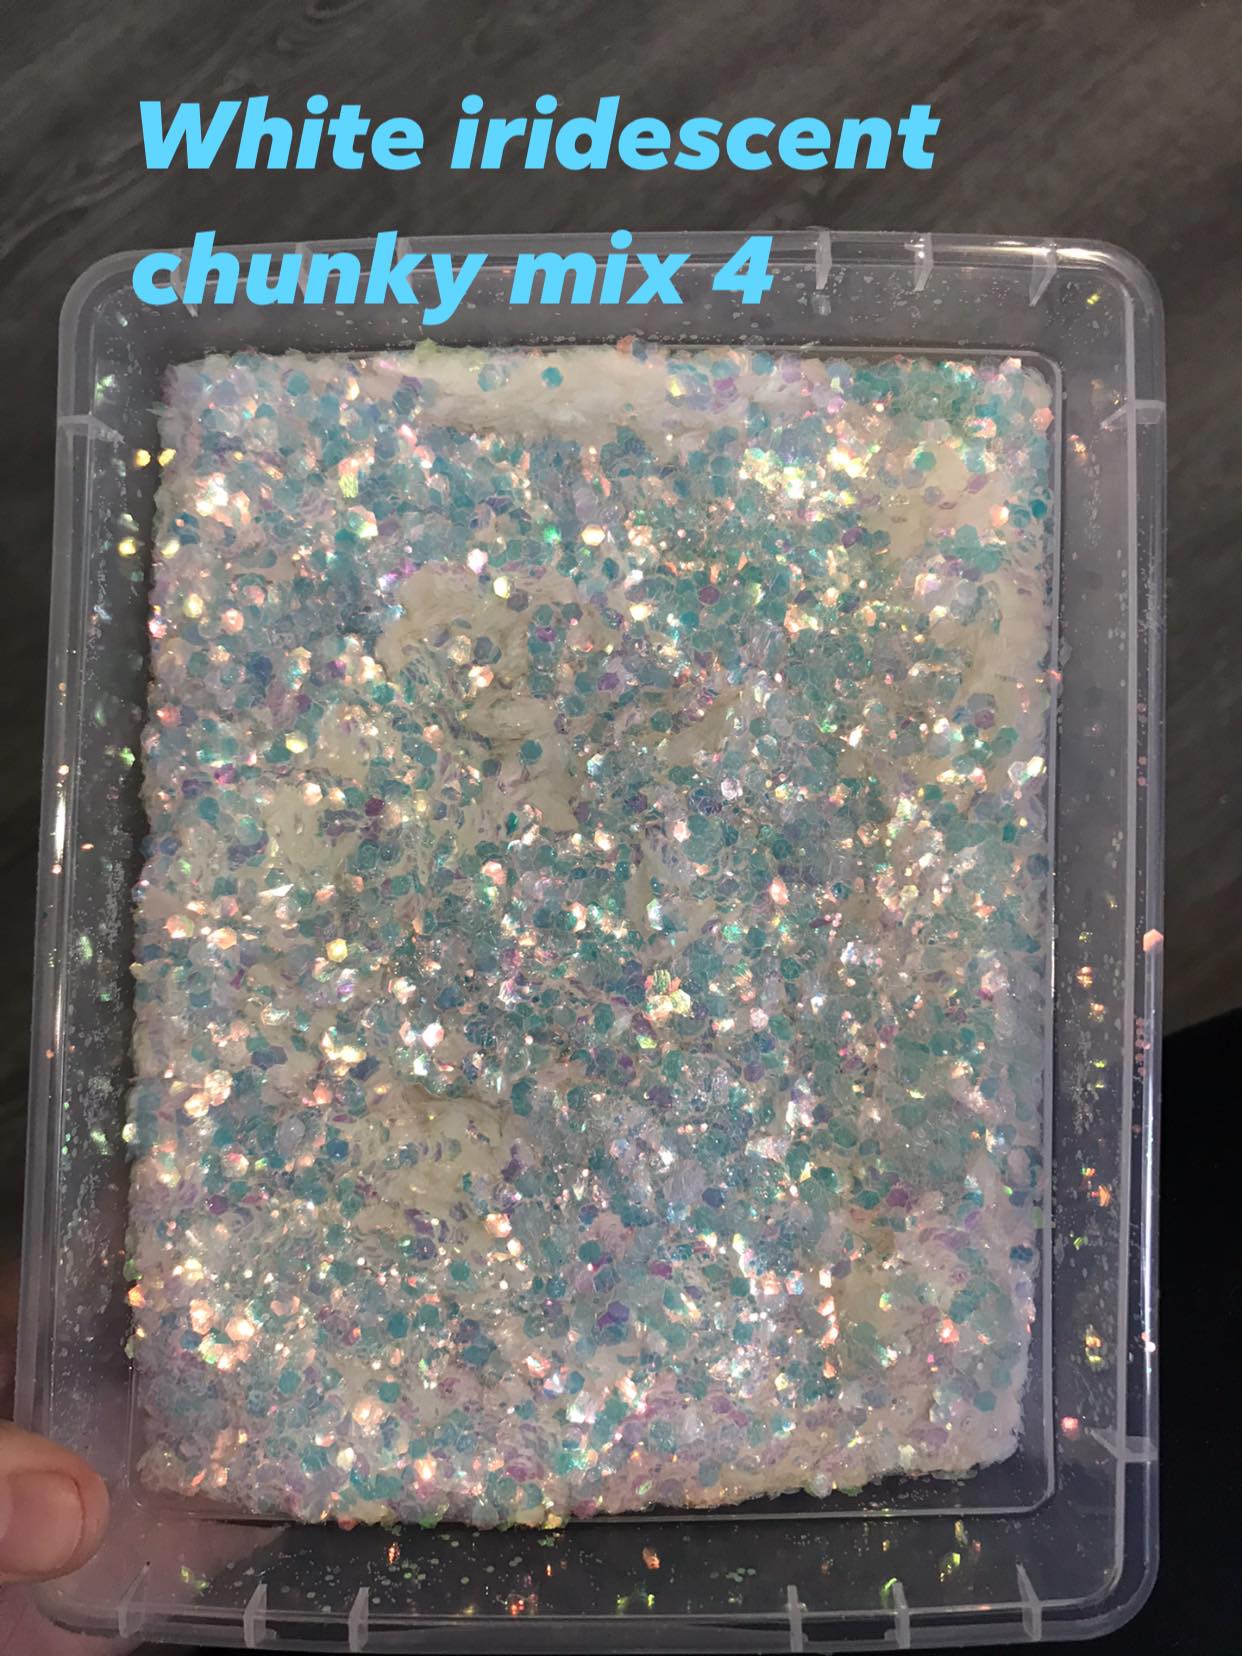 Frozen Chunky Mix